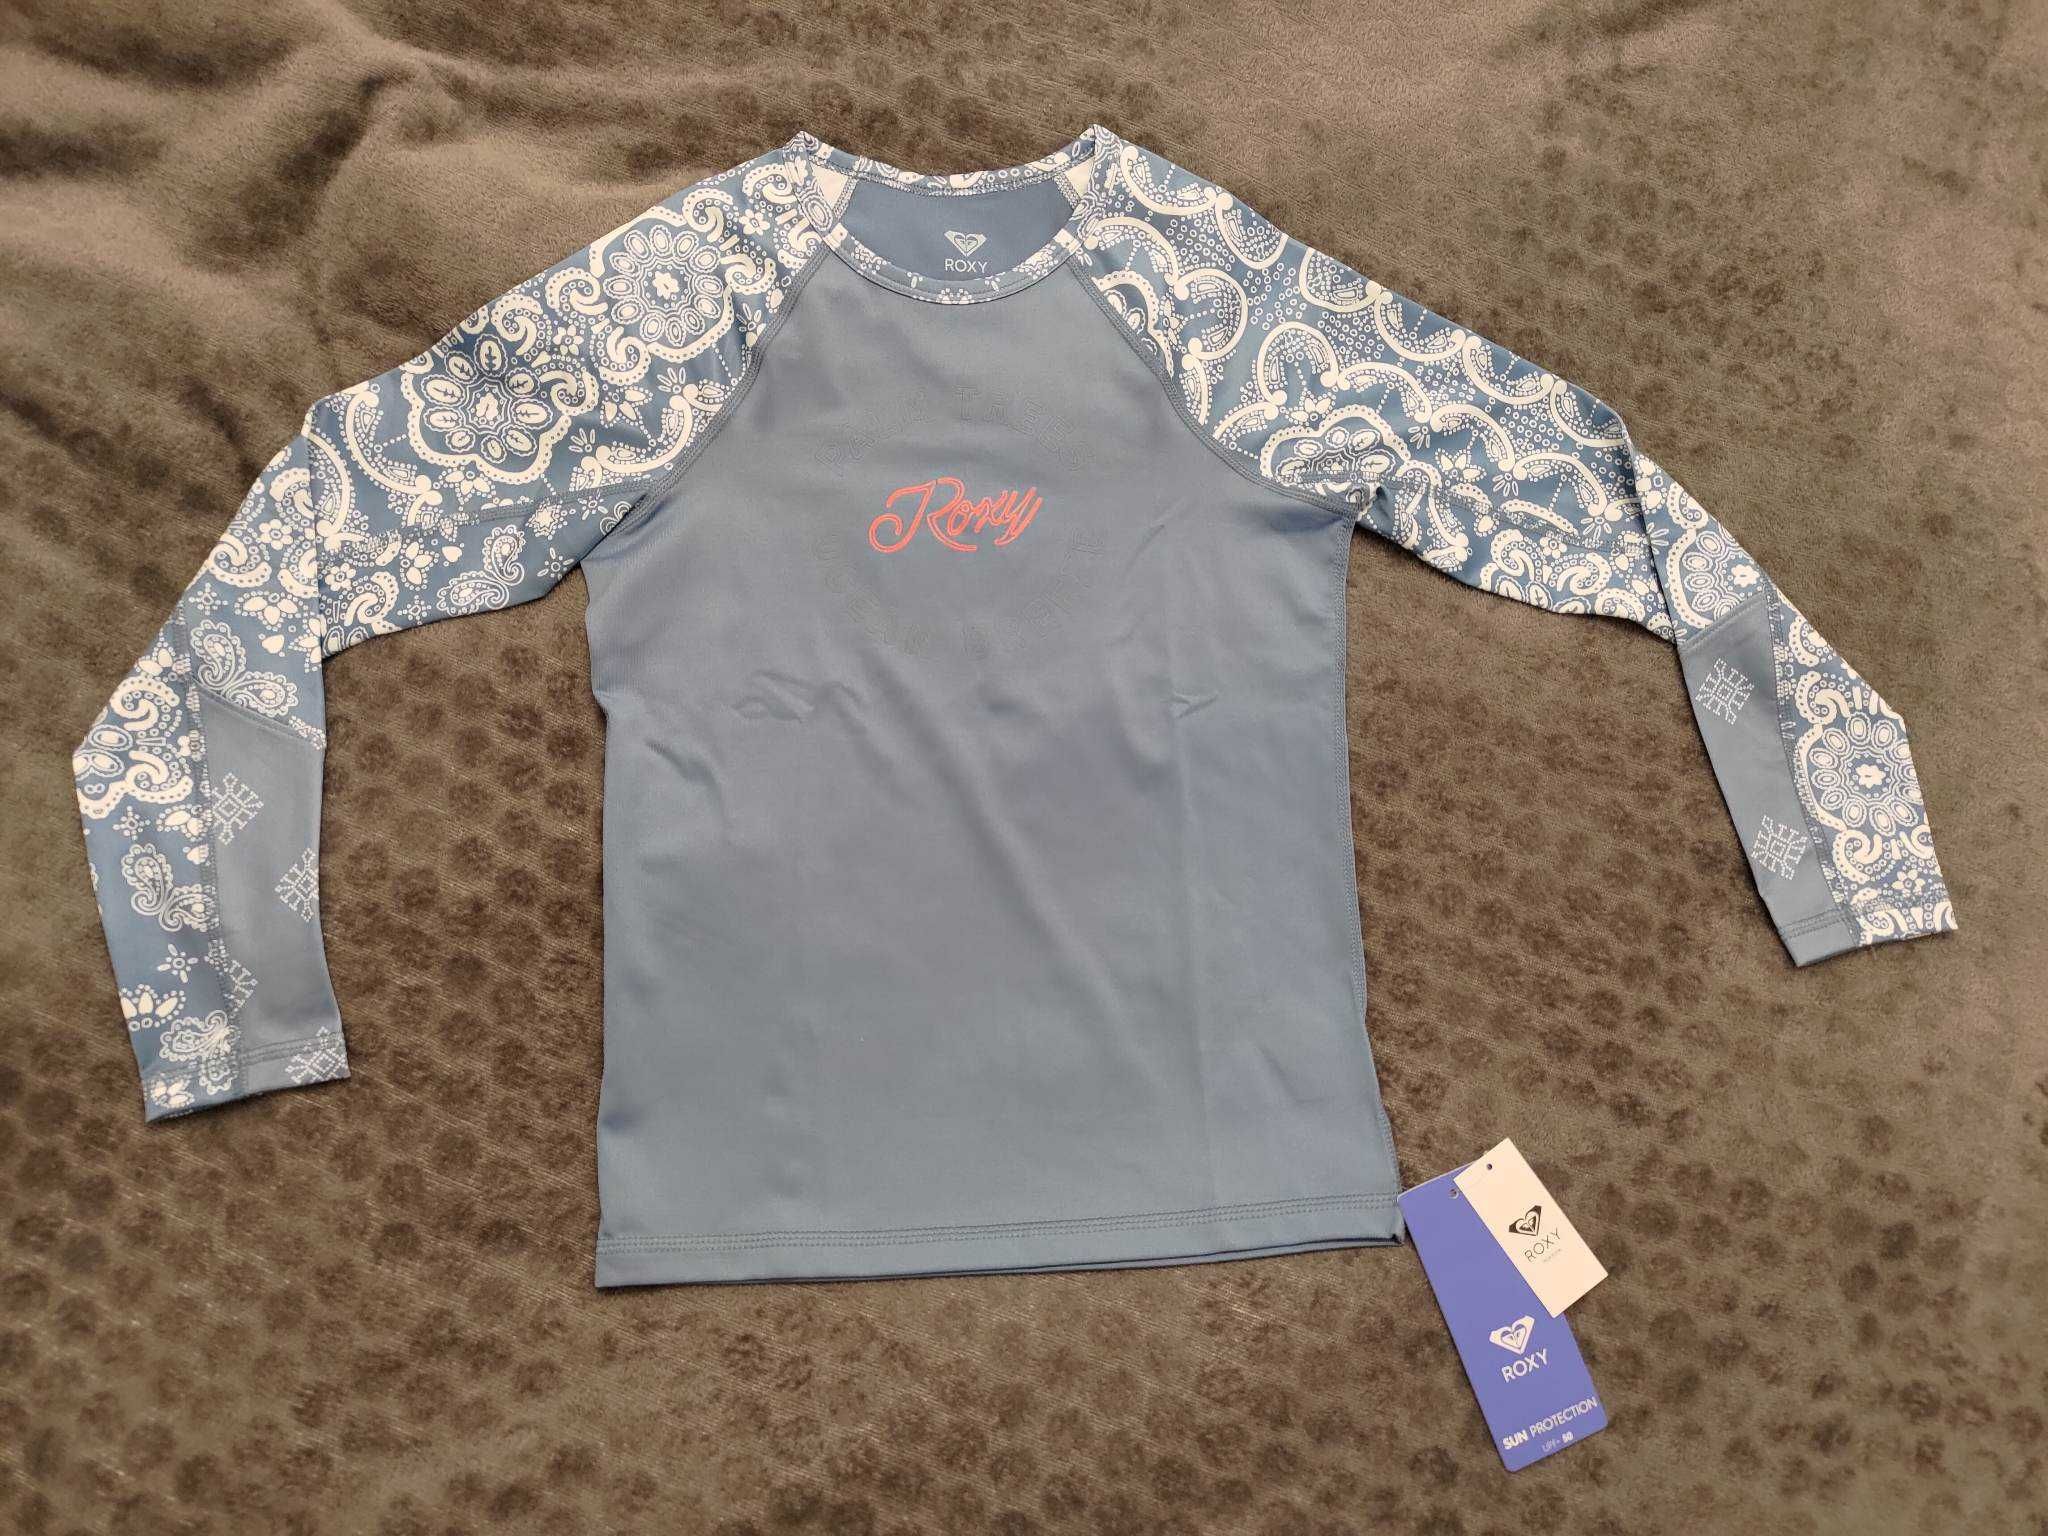 Roxy Rashguard - Koszulka ochronna UPF 50+ - rozmiar 152